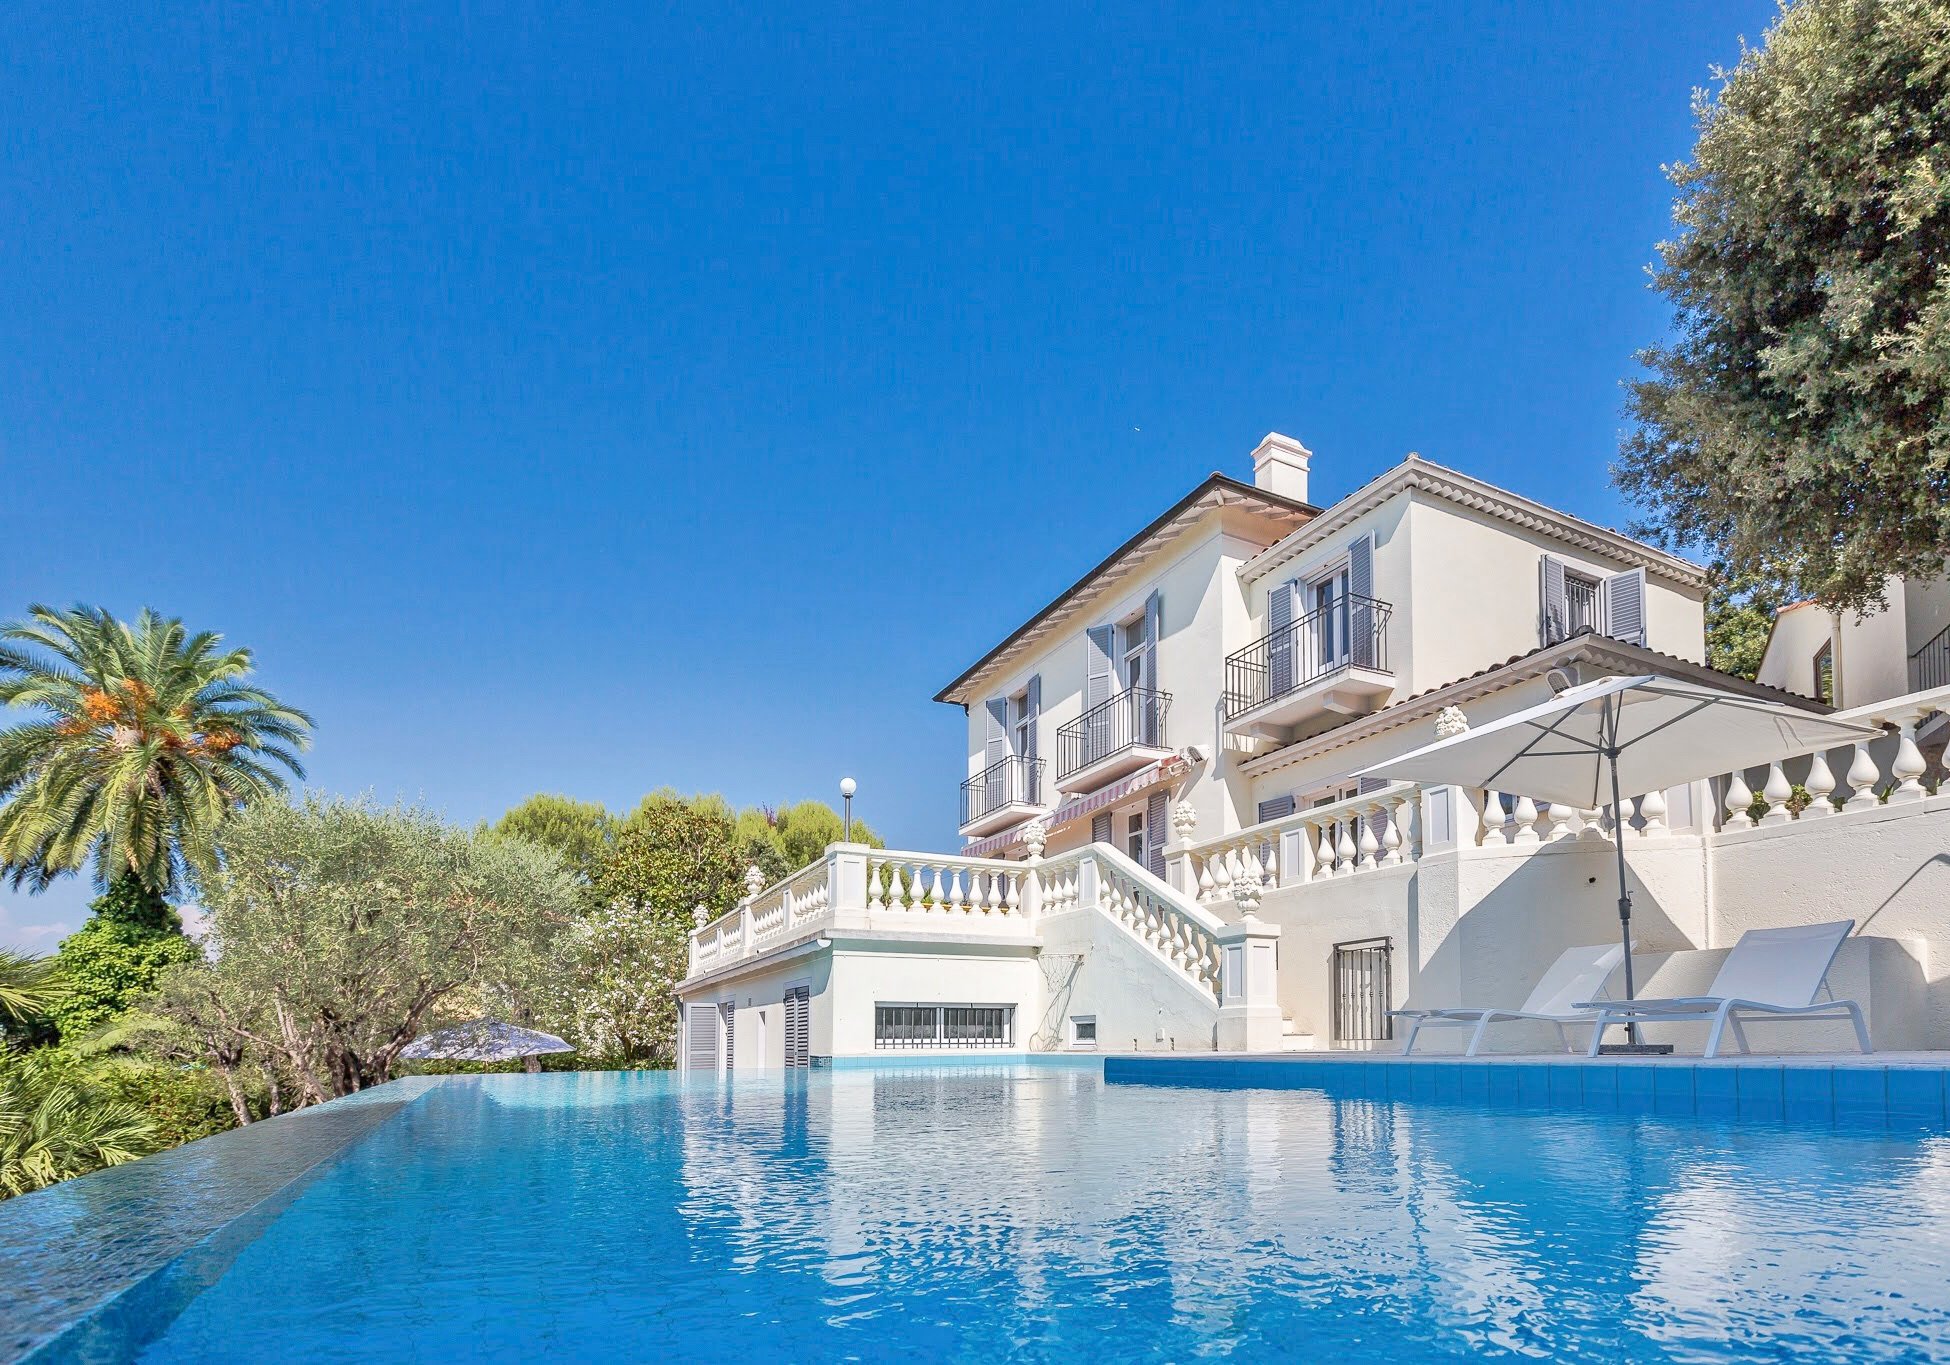 Villa Salis Cap d'Antibes Luxury Holiday Villa Rental